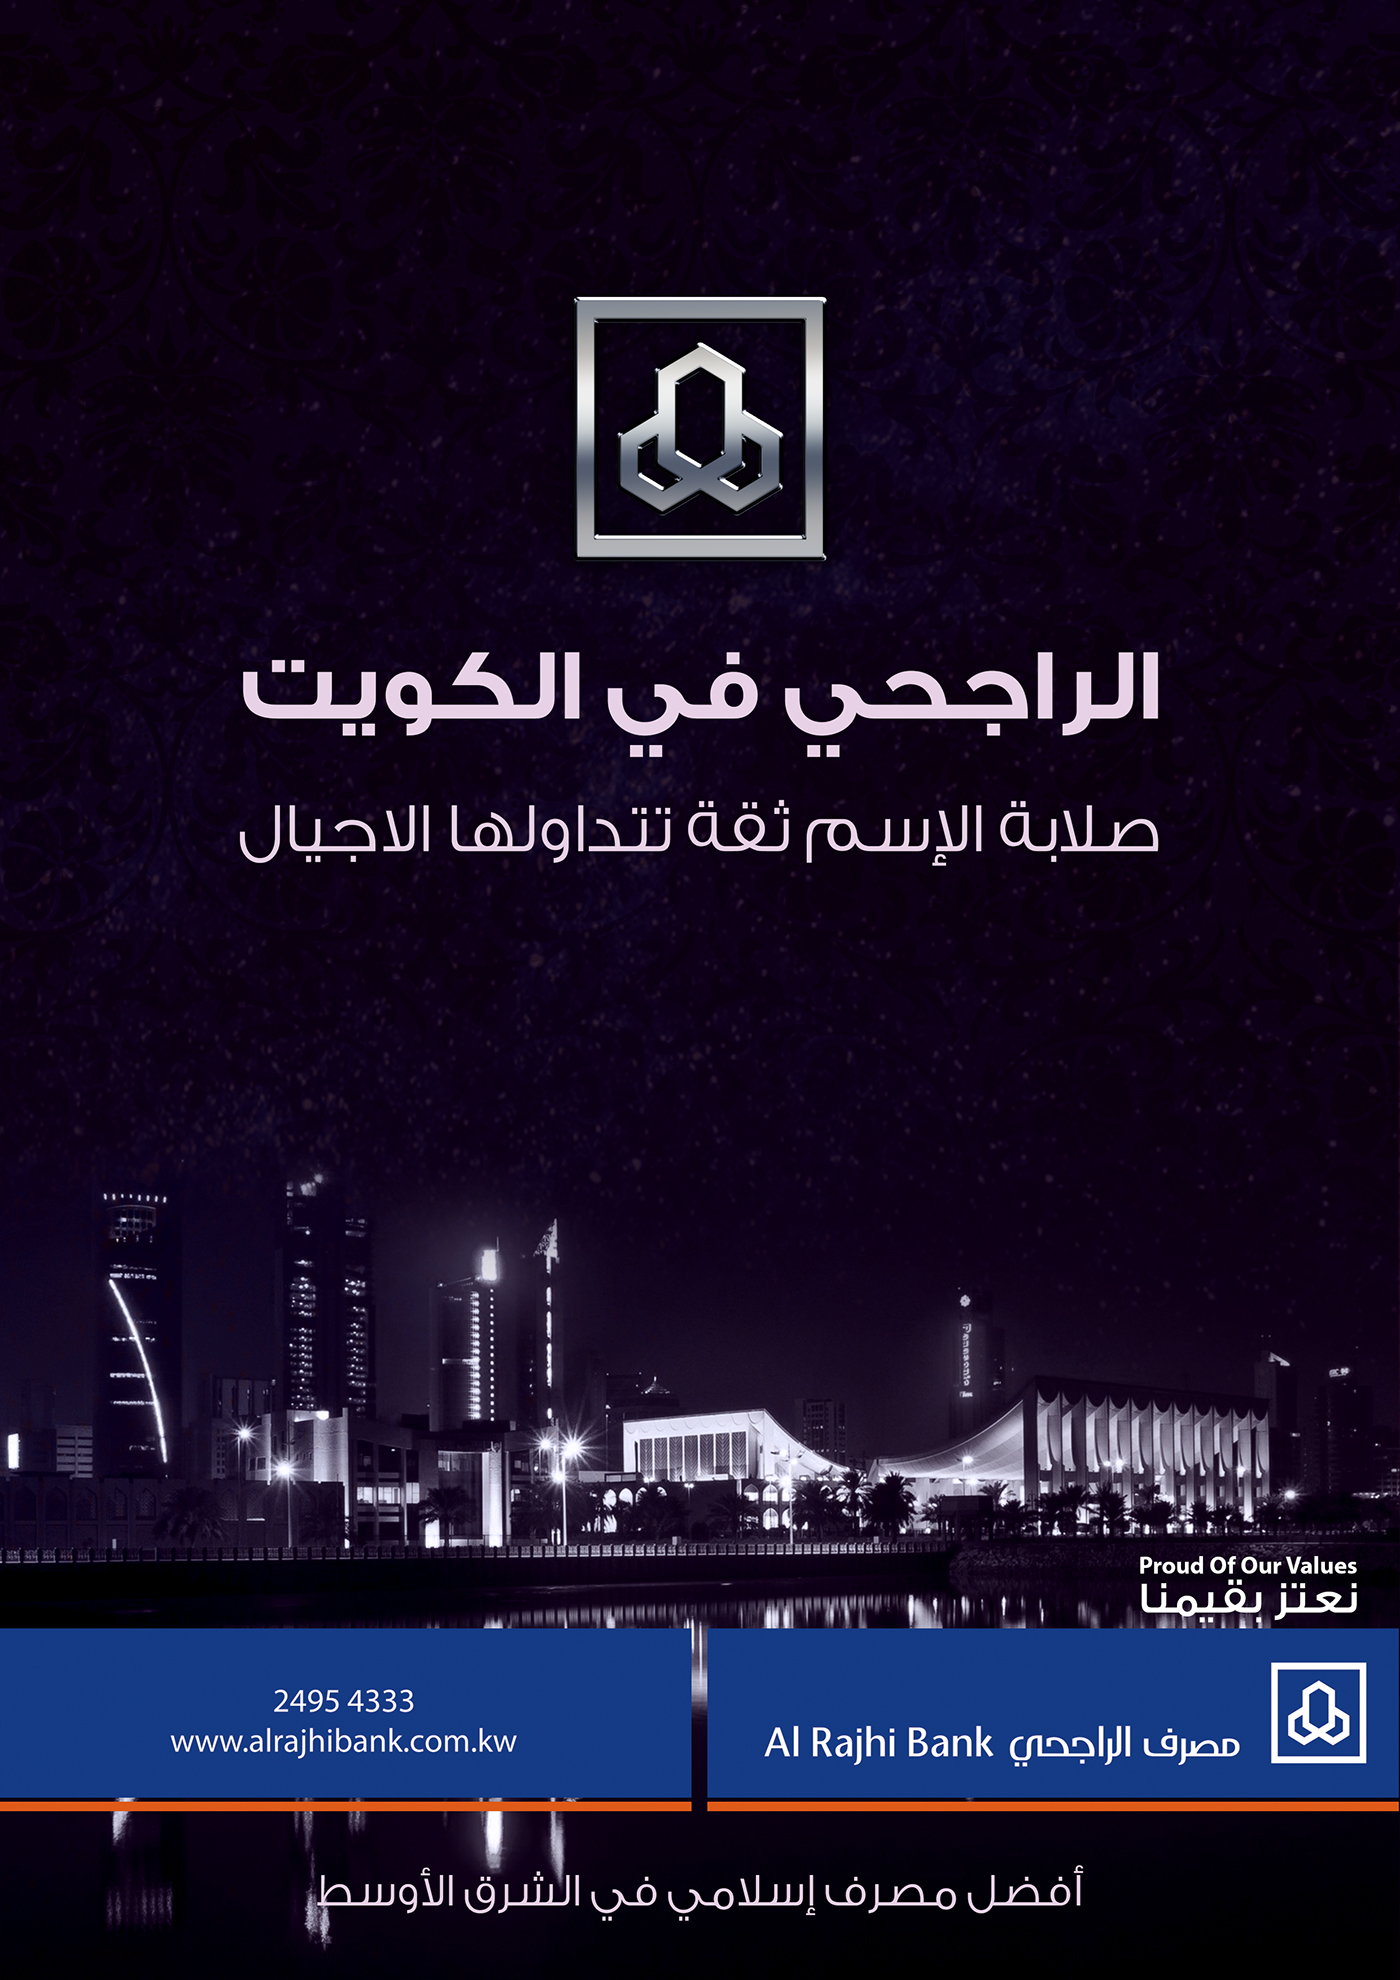 Al Rajhi Bank ads